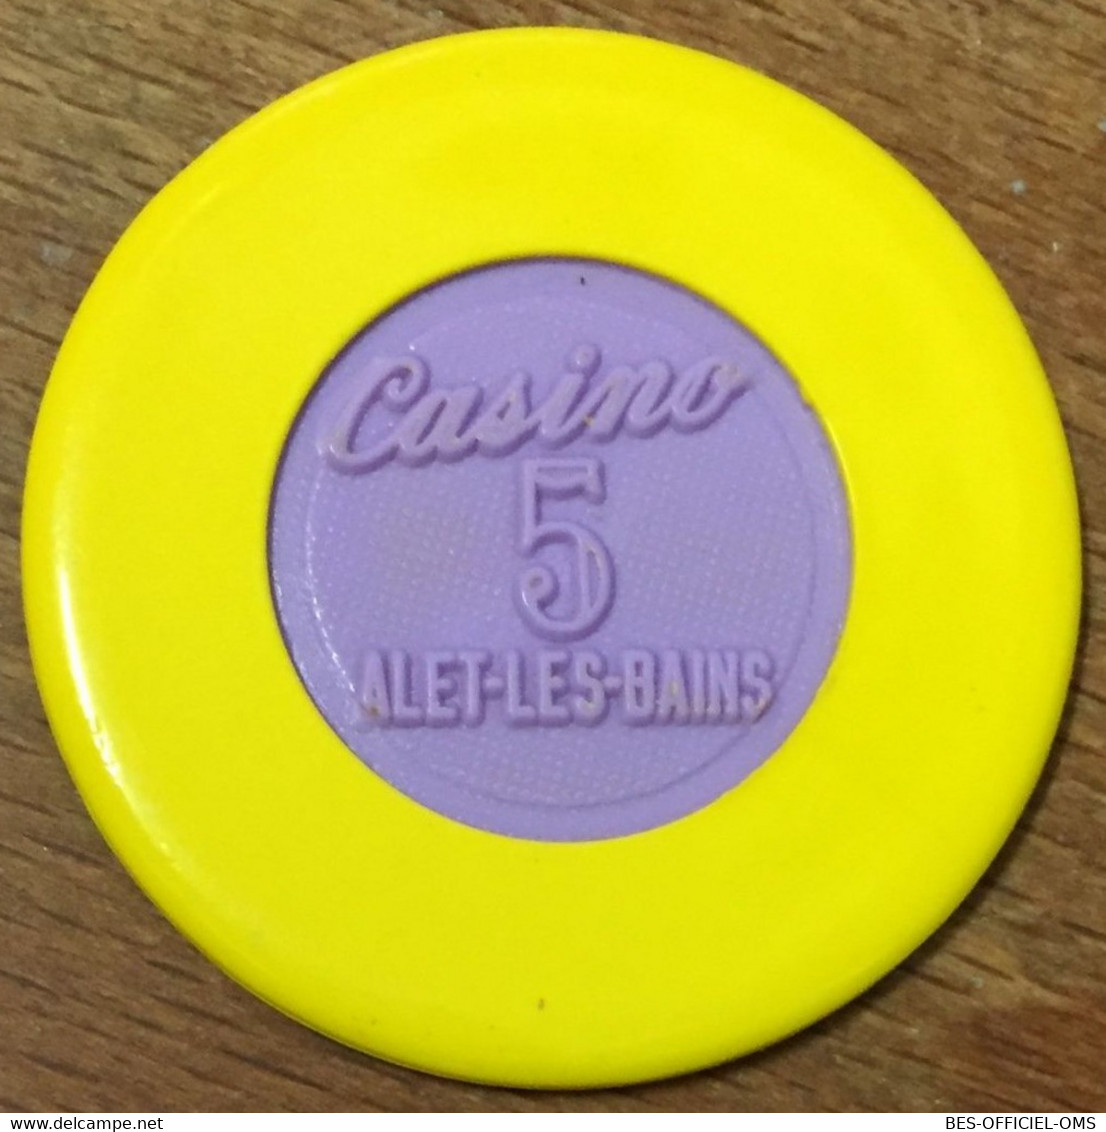 11 ALET-LES-BAINS CASINO JETON DE 5 ANCIENS FRANCS CHIP TOKENS COINS - Casino